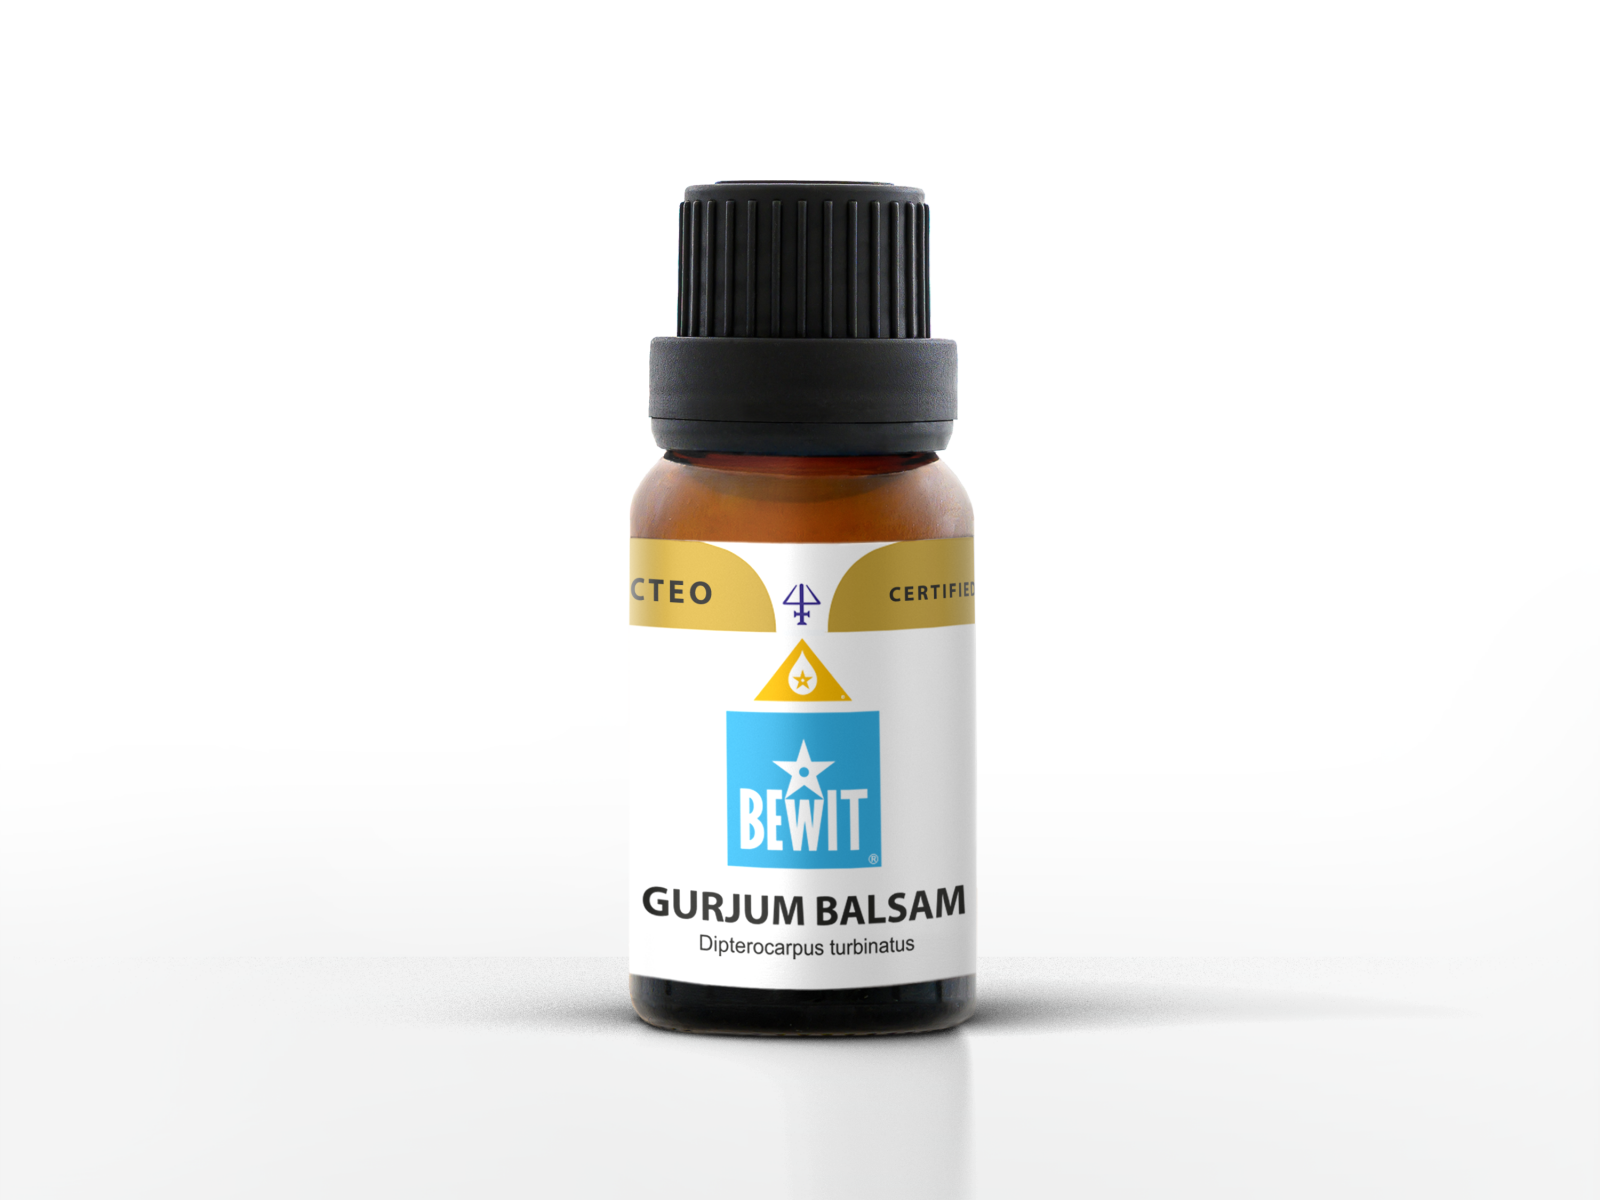 BEWIT Gurjum Balsam - 100% pure essential oil